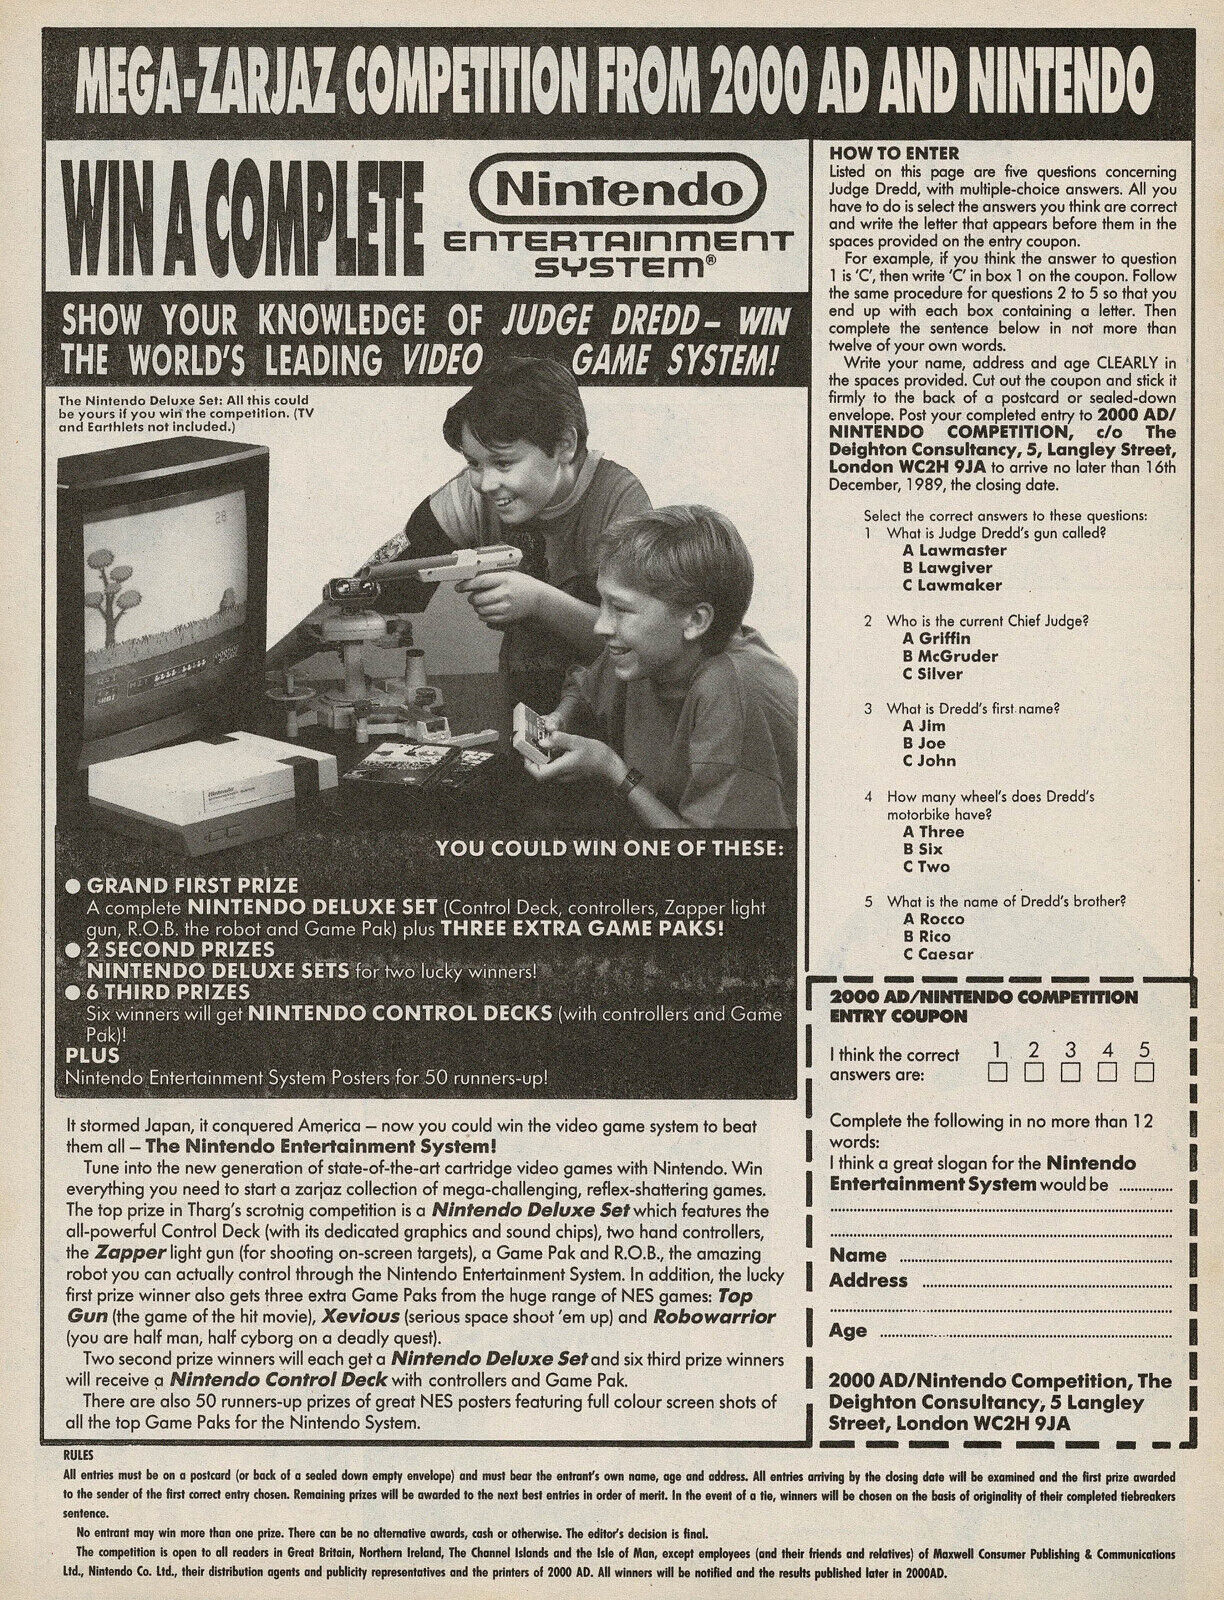 Vintage Nintendo NES Video Game Console Computer Promo Photo Print Ad 1980s